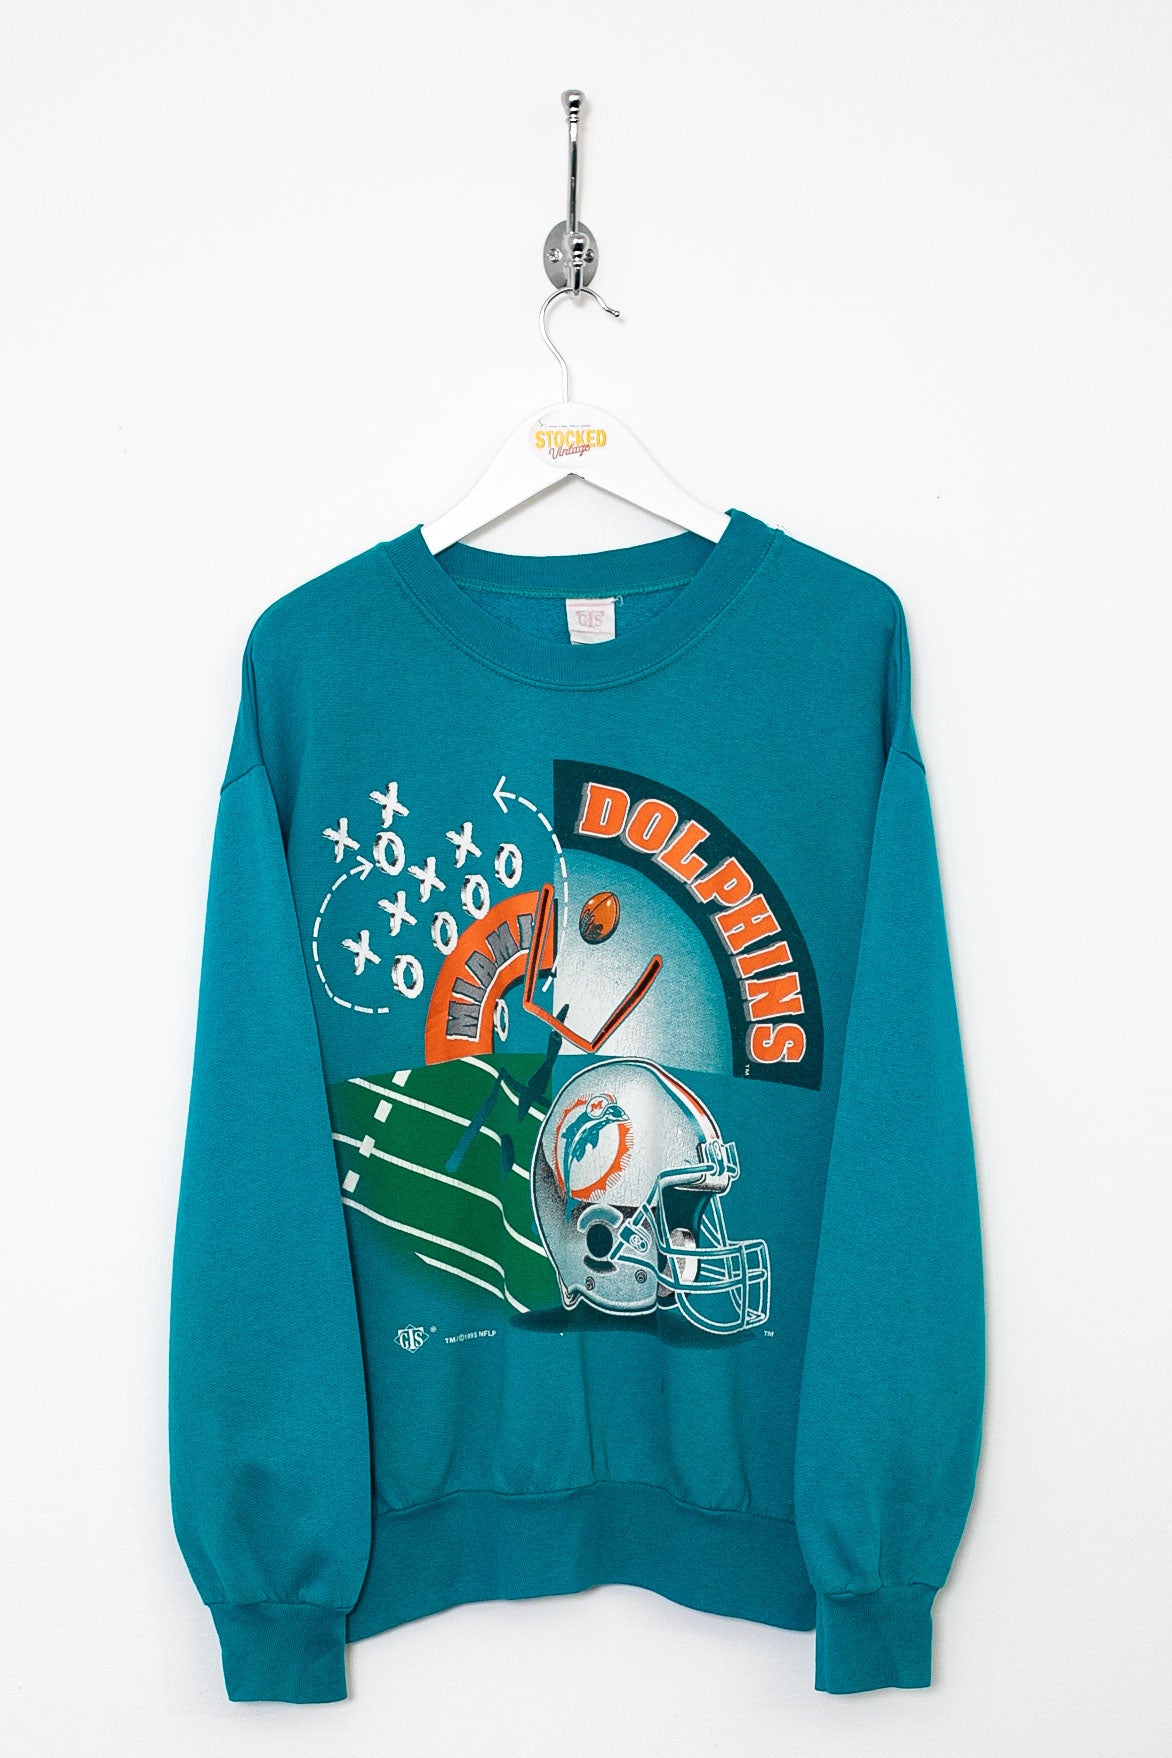 1995 NFL Miami Dolphins Sweatshirt (M)